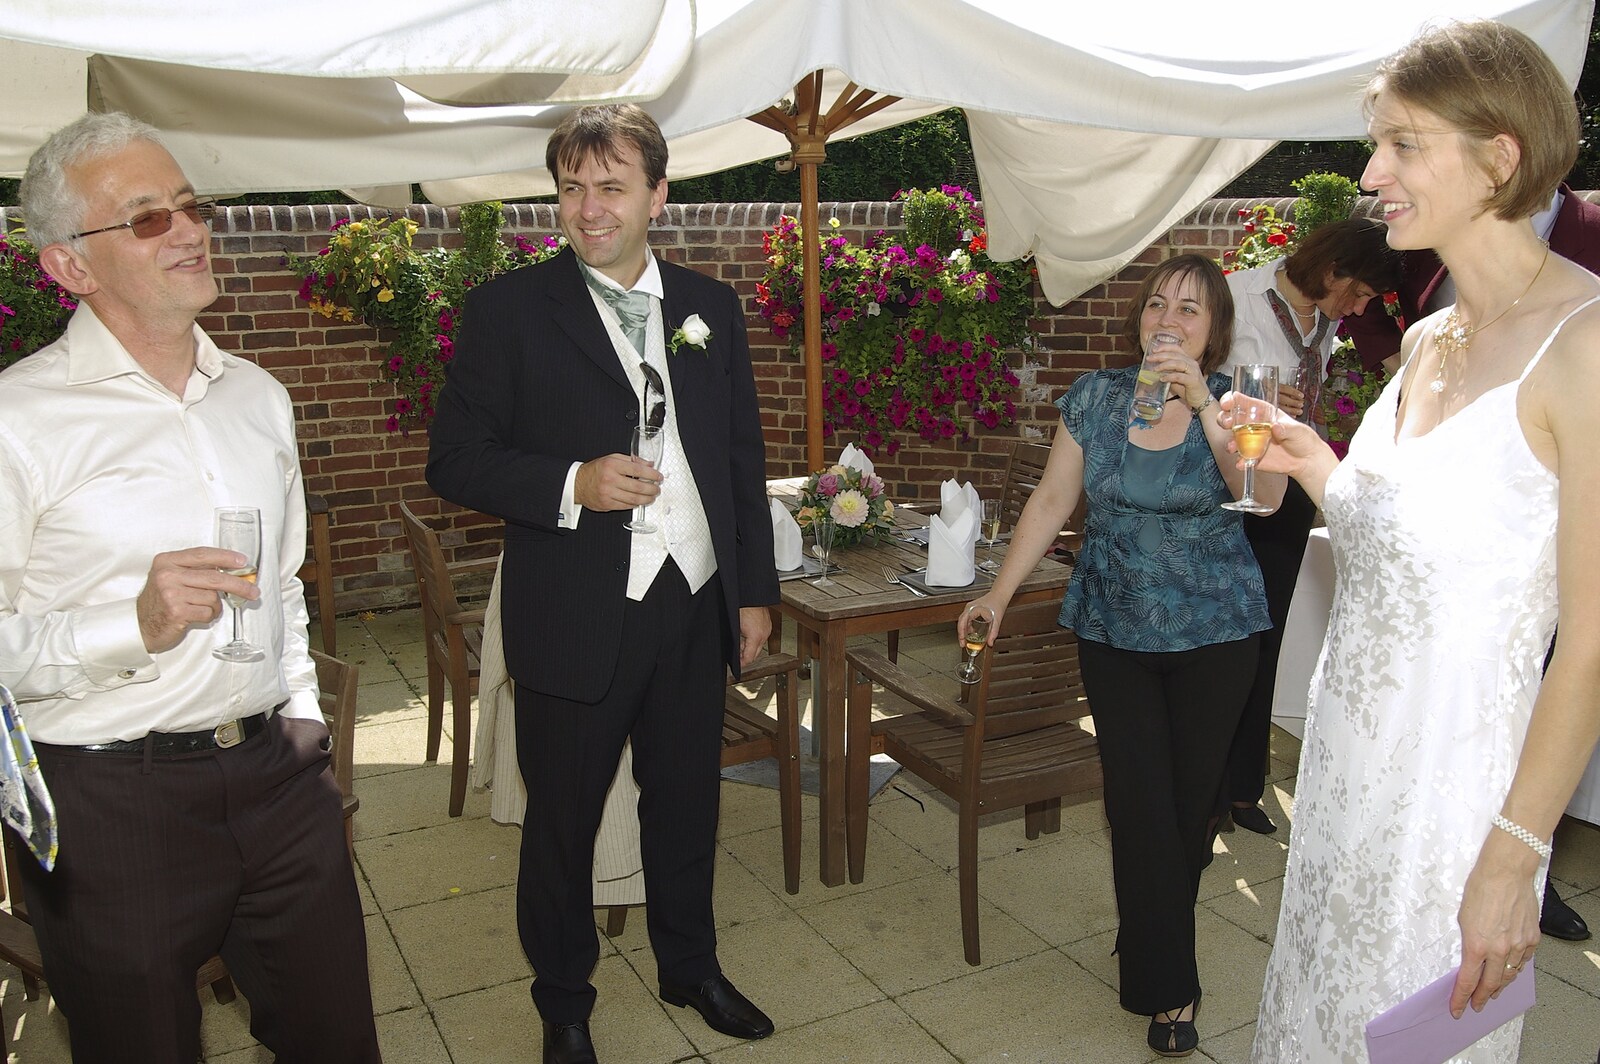 Liviu and Christina's Wedding Day, Babraham, Cambridge - 11th August 2007: A toast occurs